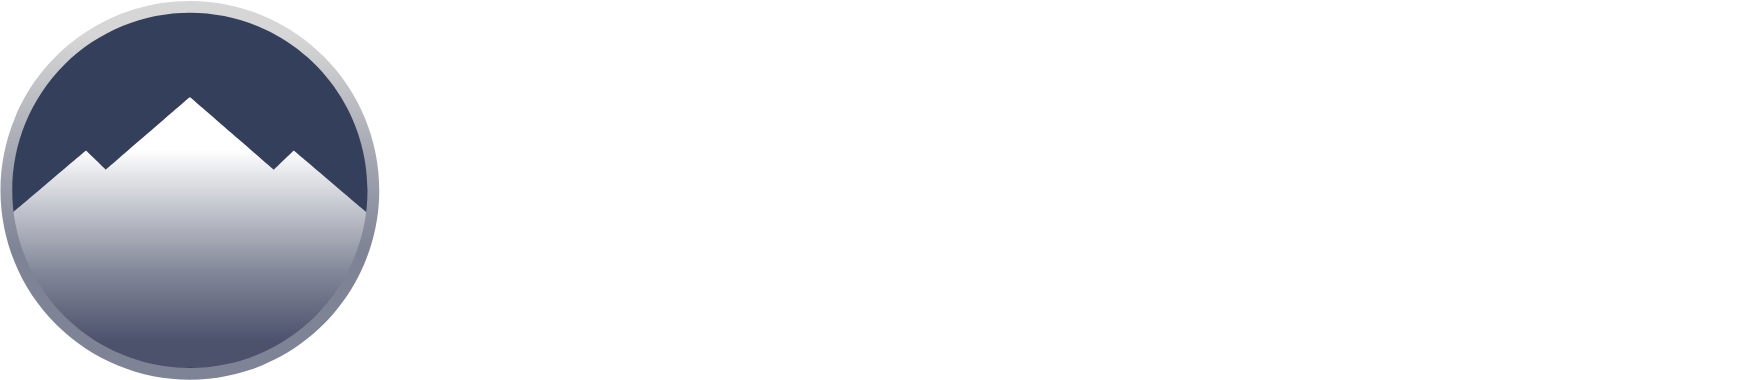 Summit Hotel Properties logo large for dark backgrounds (transparent PNG)